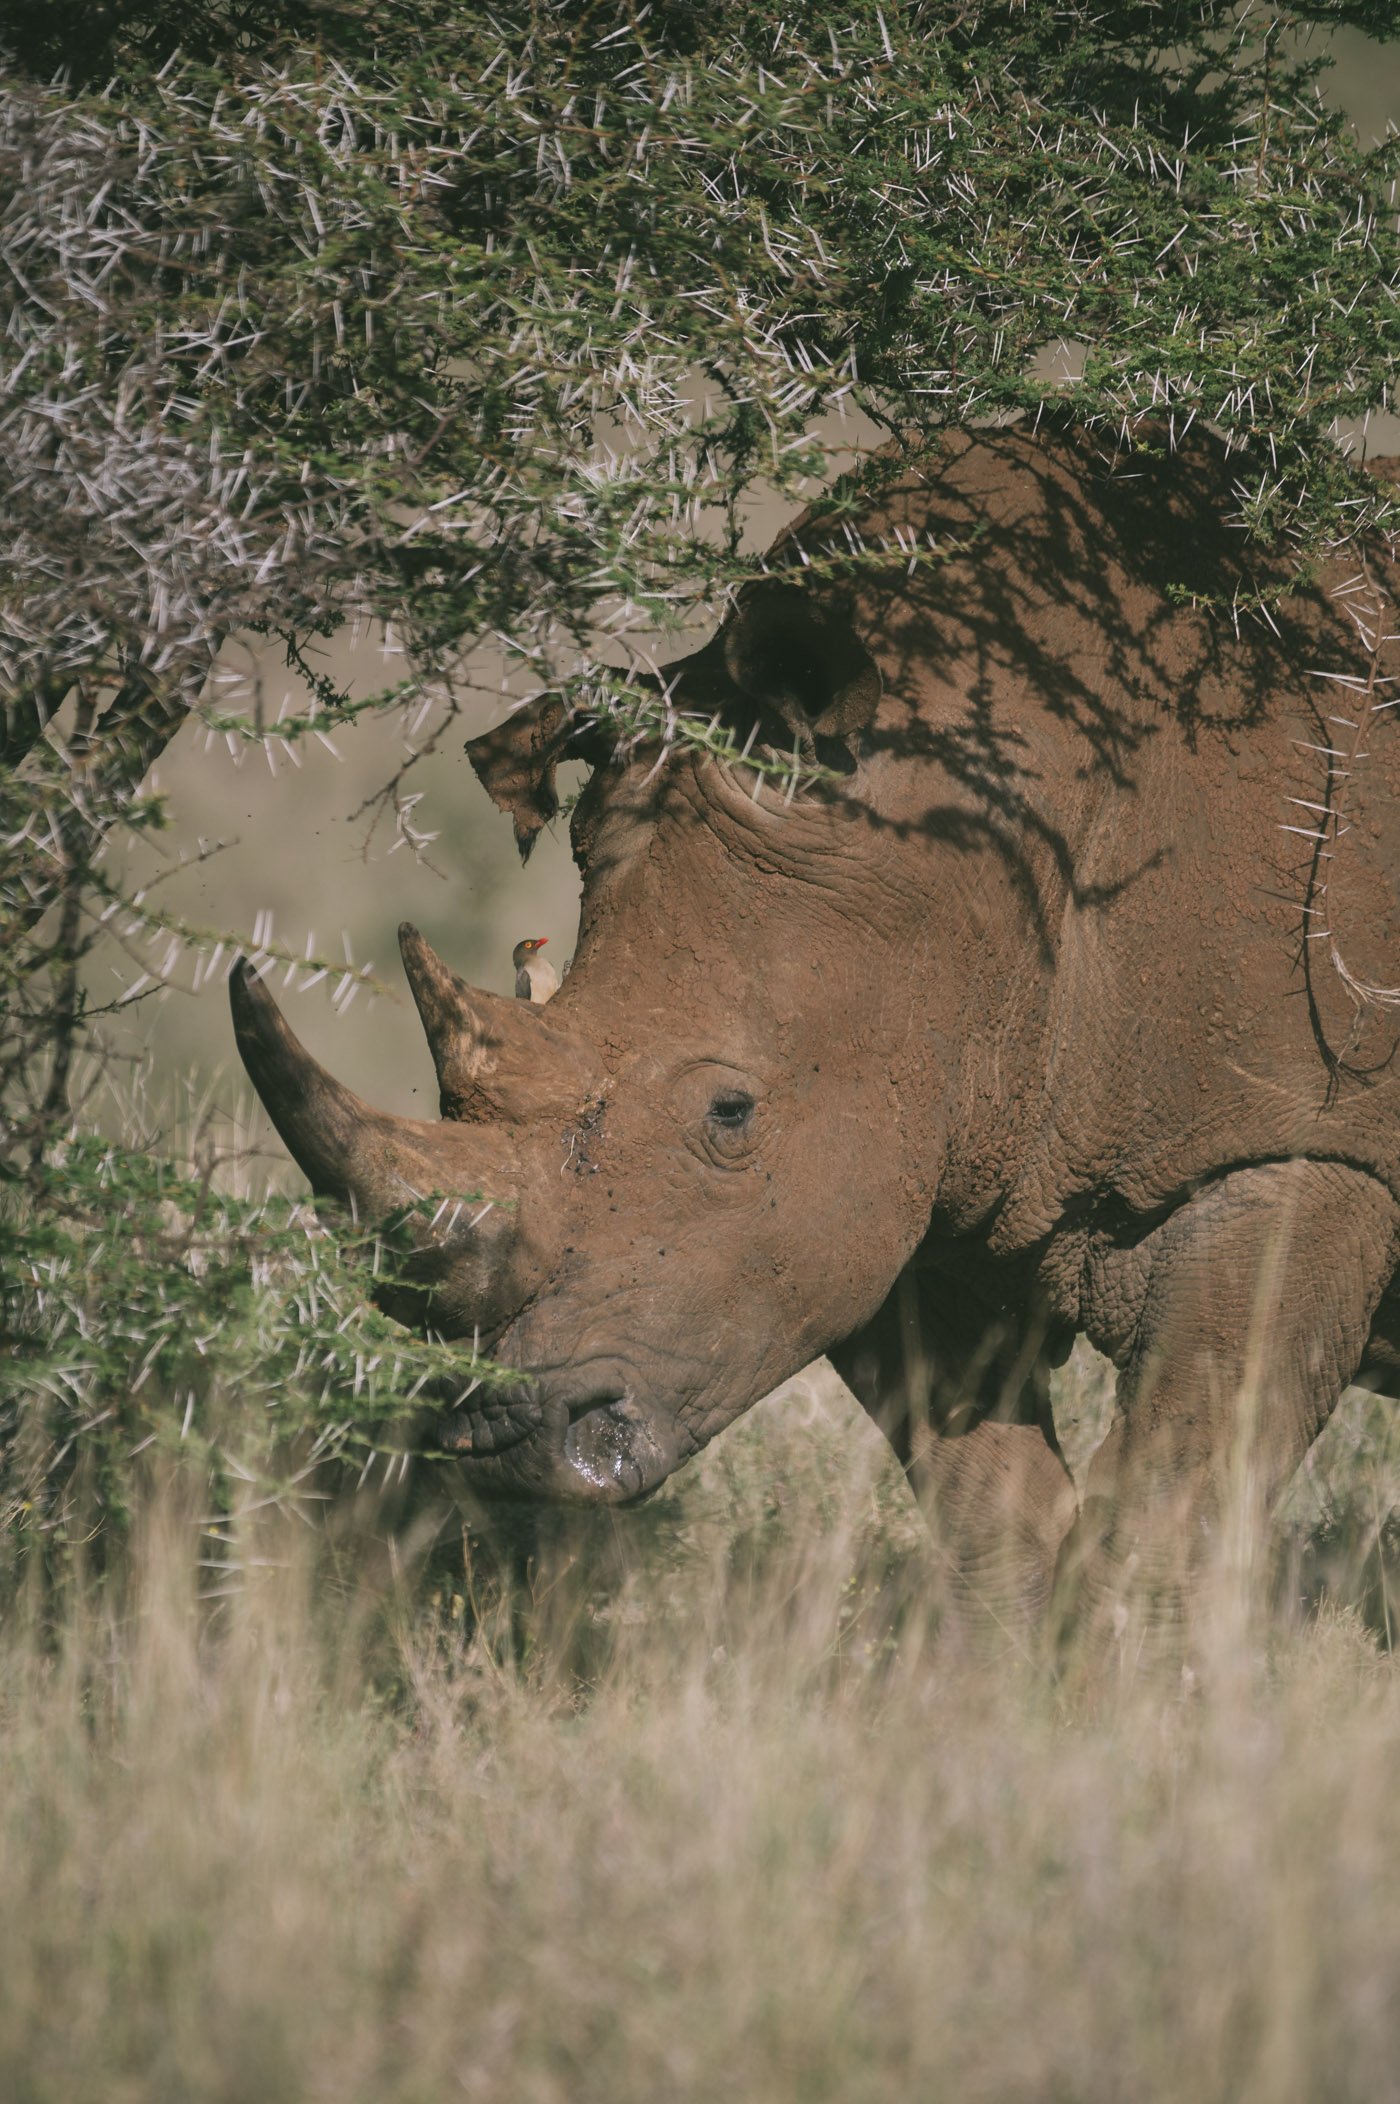 Rhino at Lewa Conservancy Kenya